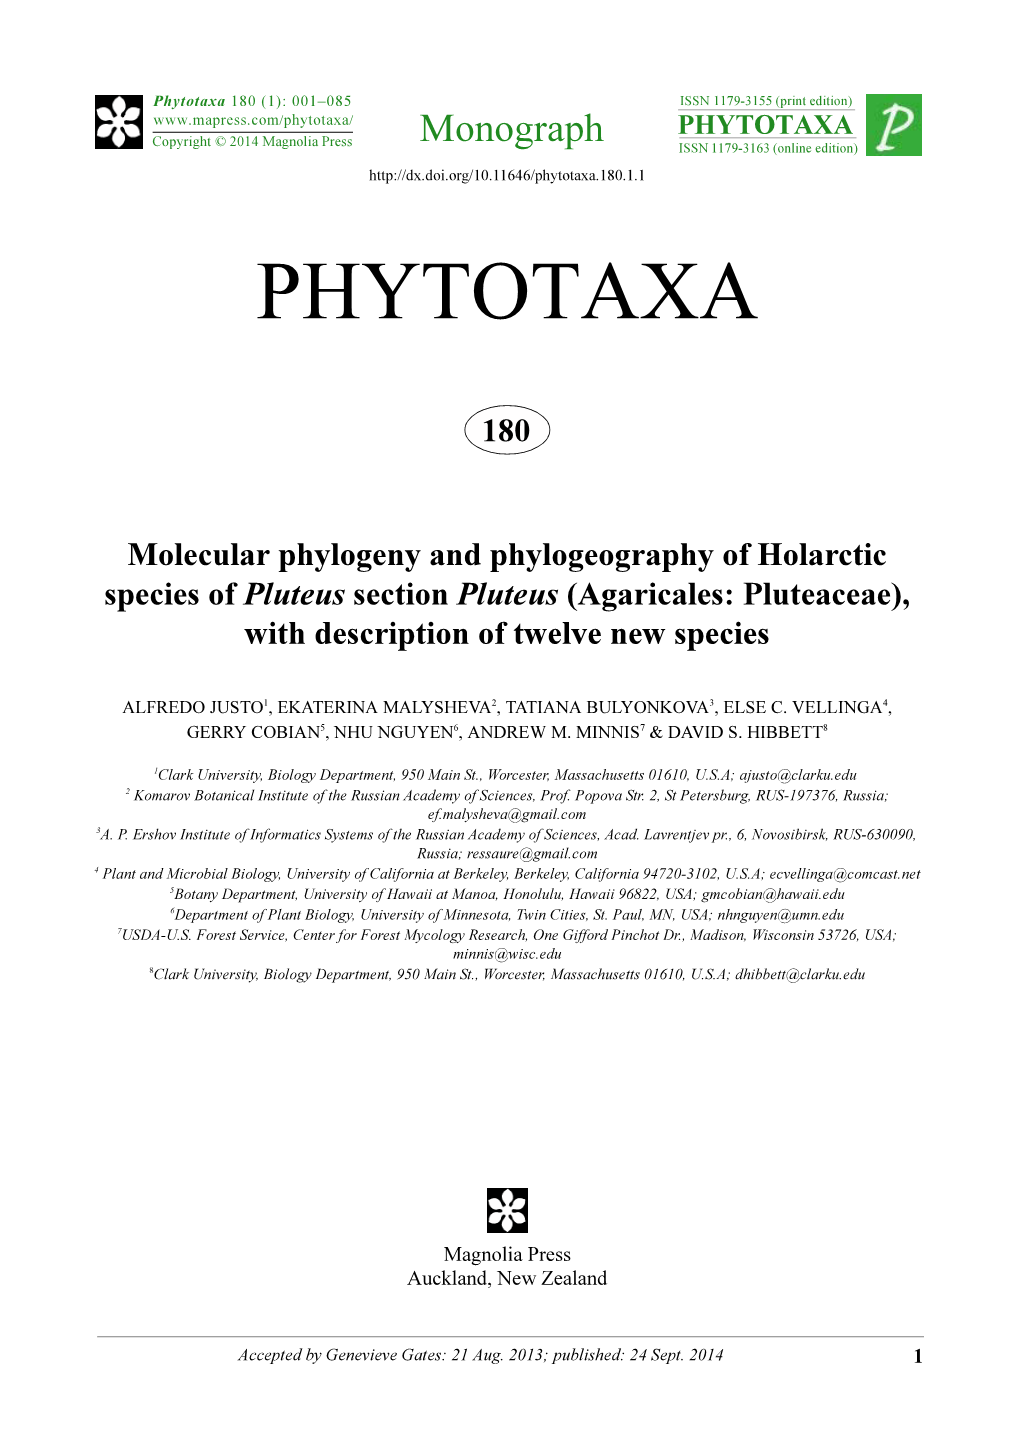 Agaricales: Pluteaceae), with Description of Twelve New Species